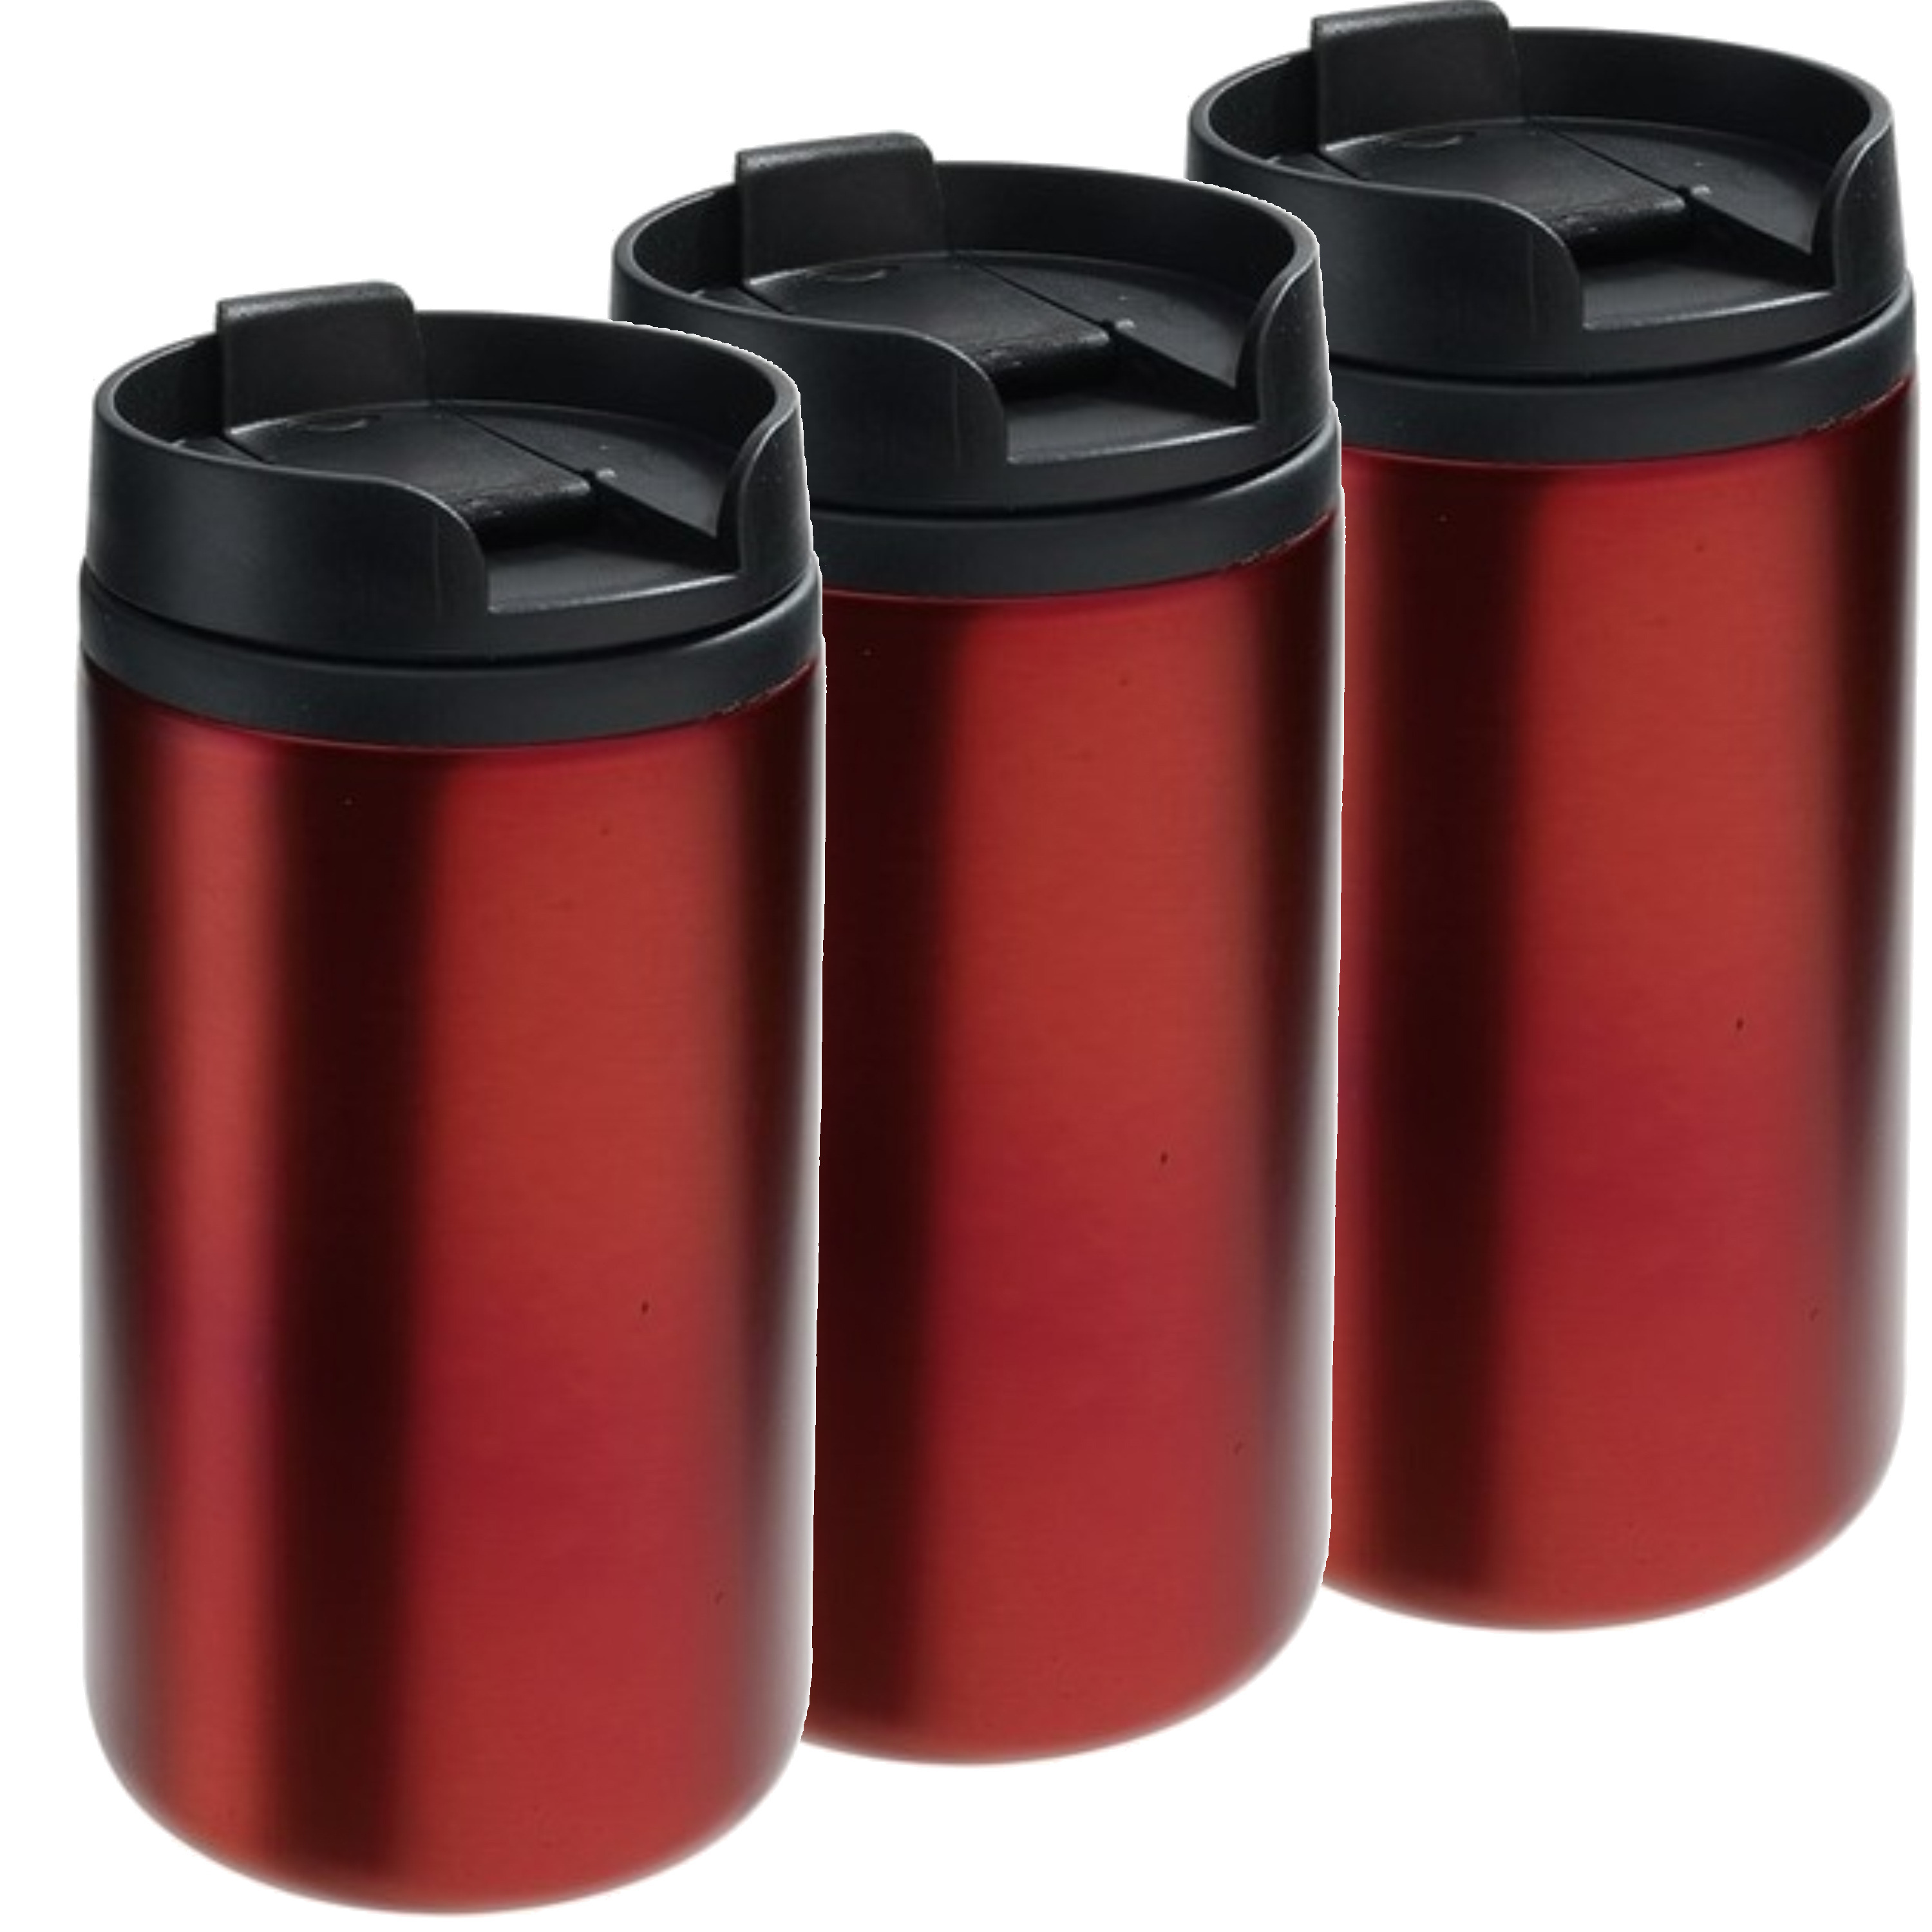 10x Thermosbekers-warmhoudbekers metallic rood 250 ml